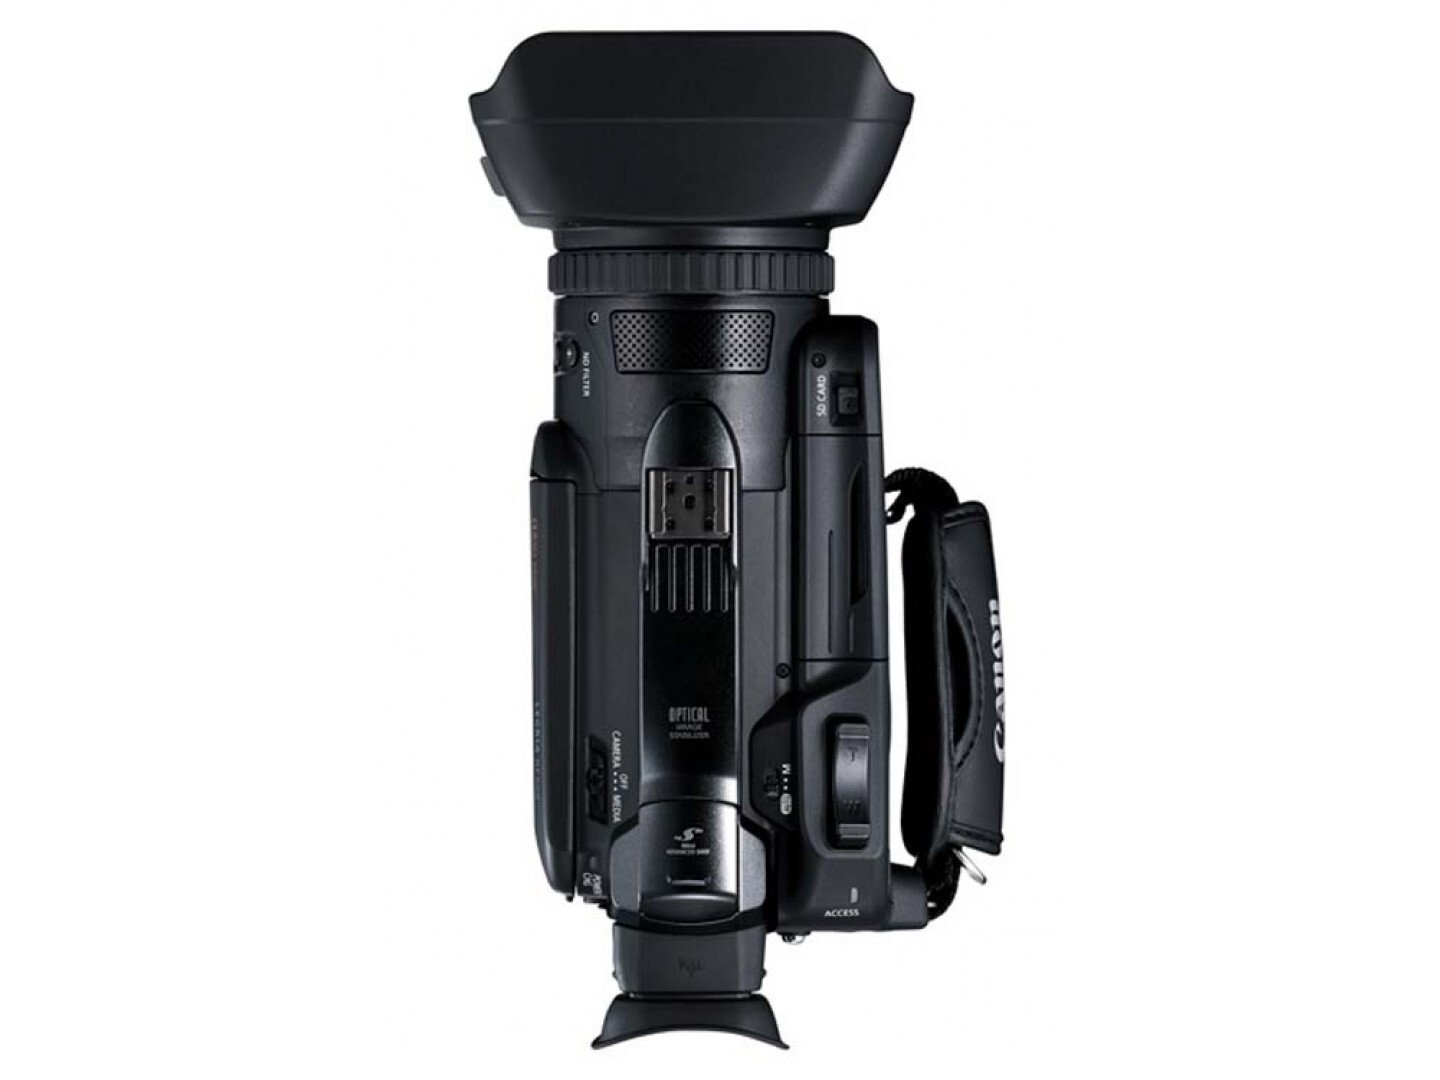 Canon Legria HF G60